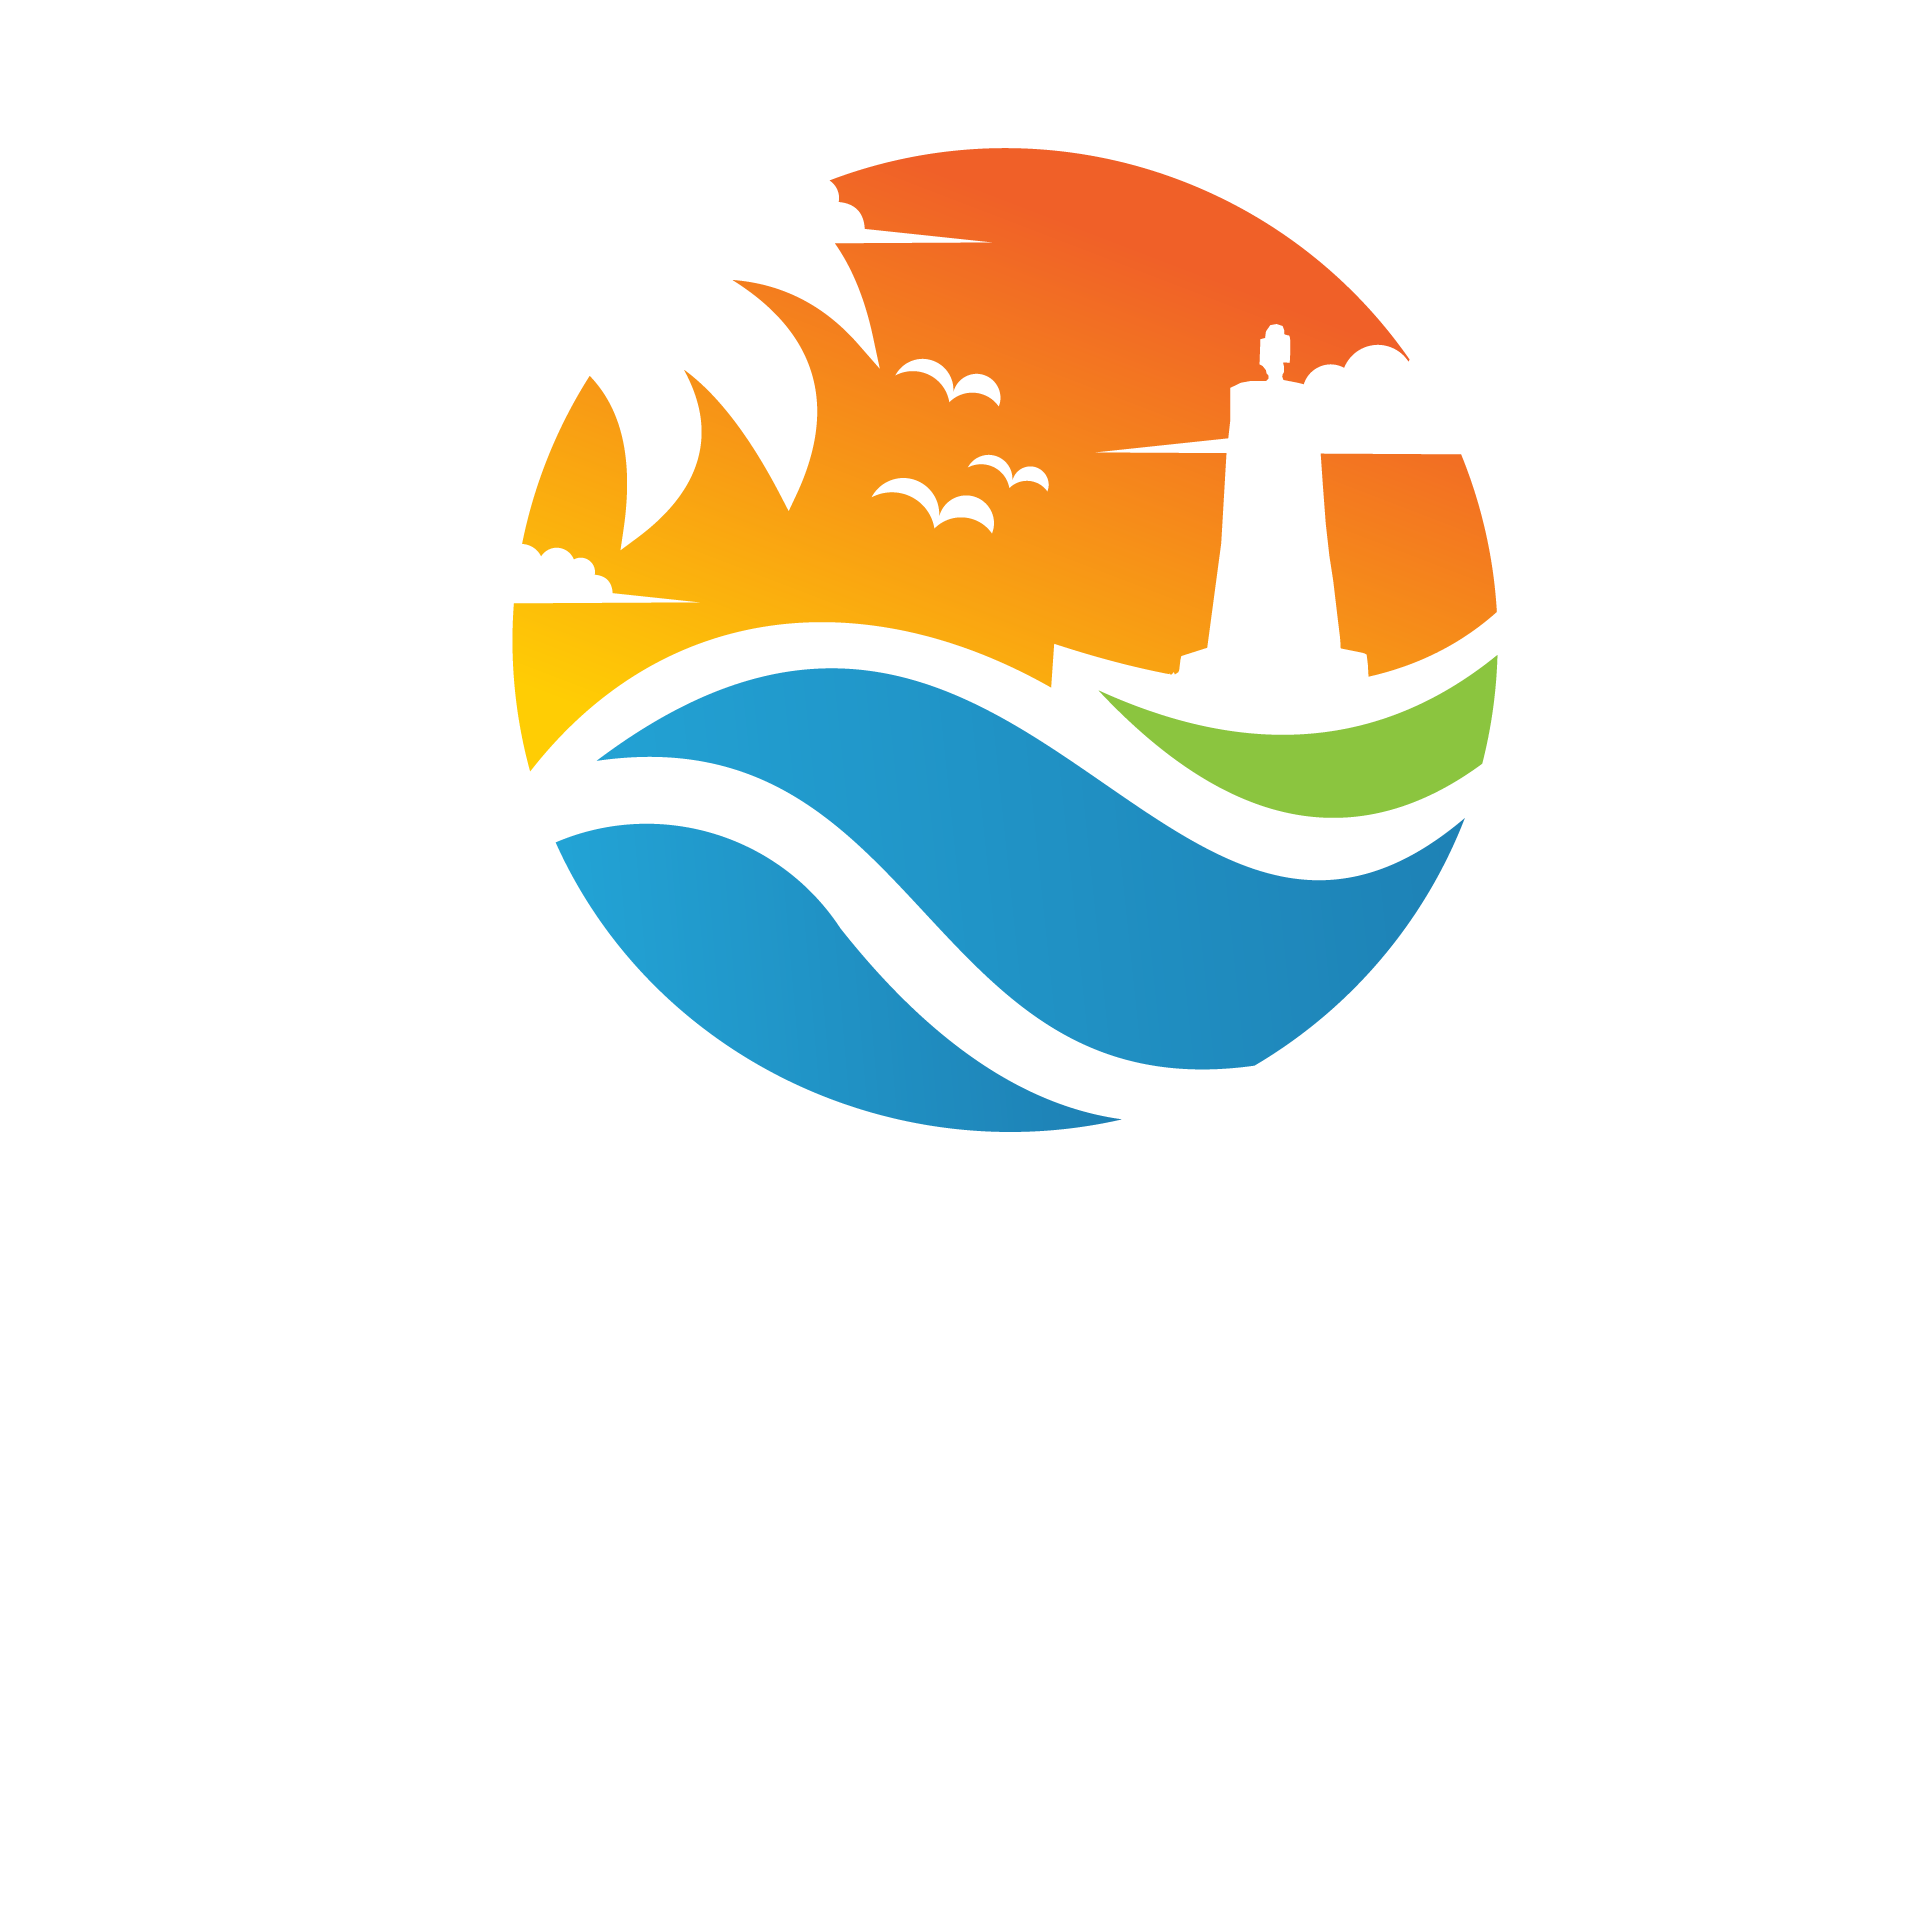 PWAM Recognized As A Beacon of Hope & Progress